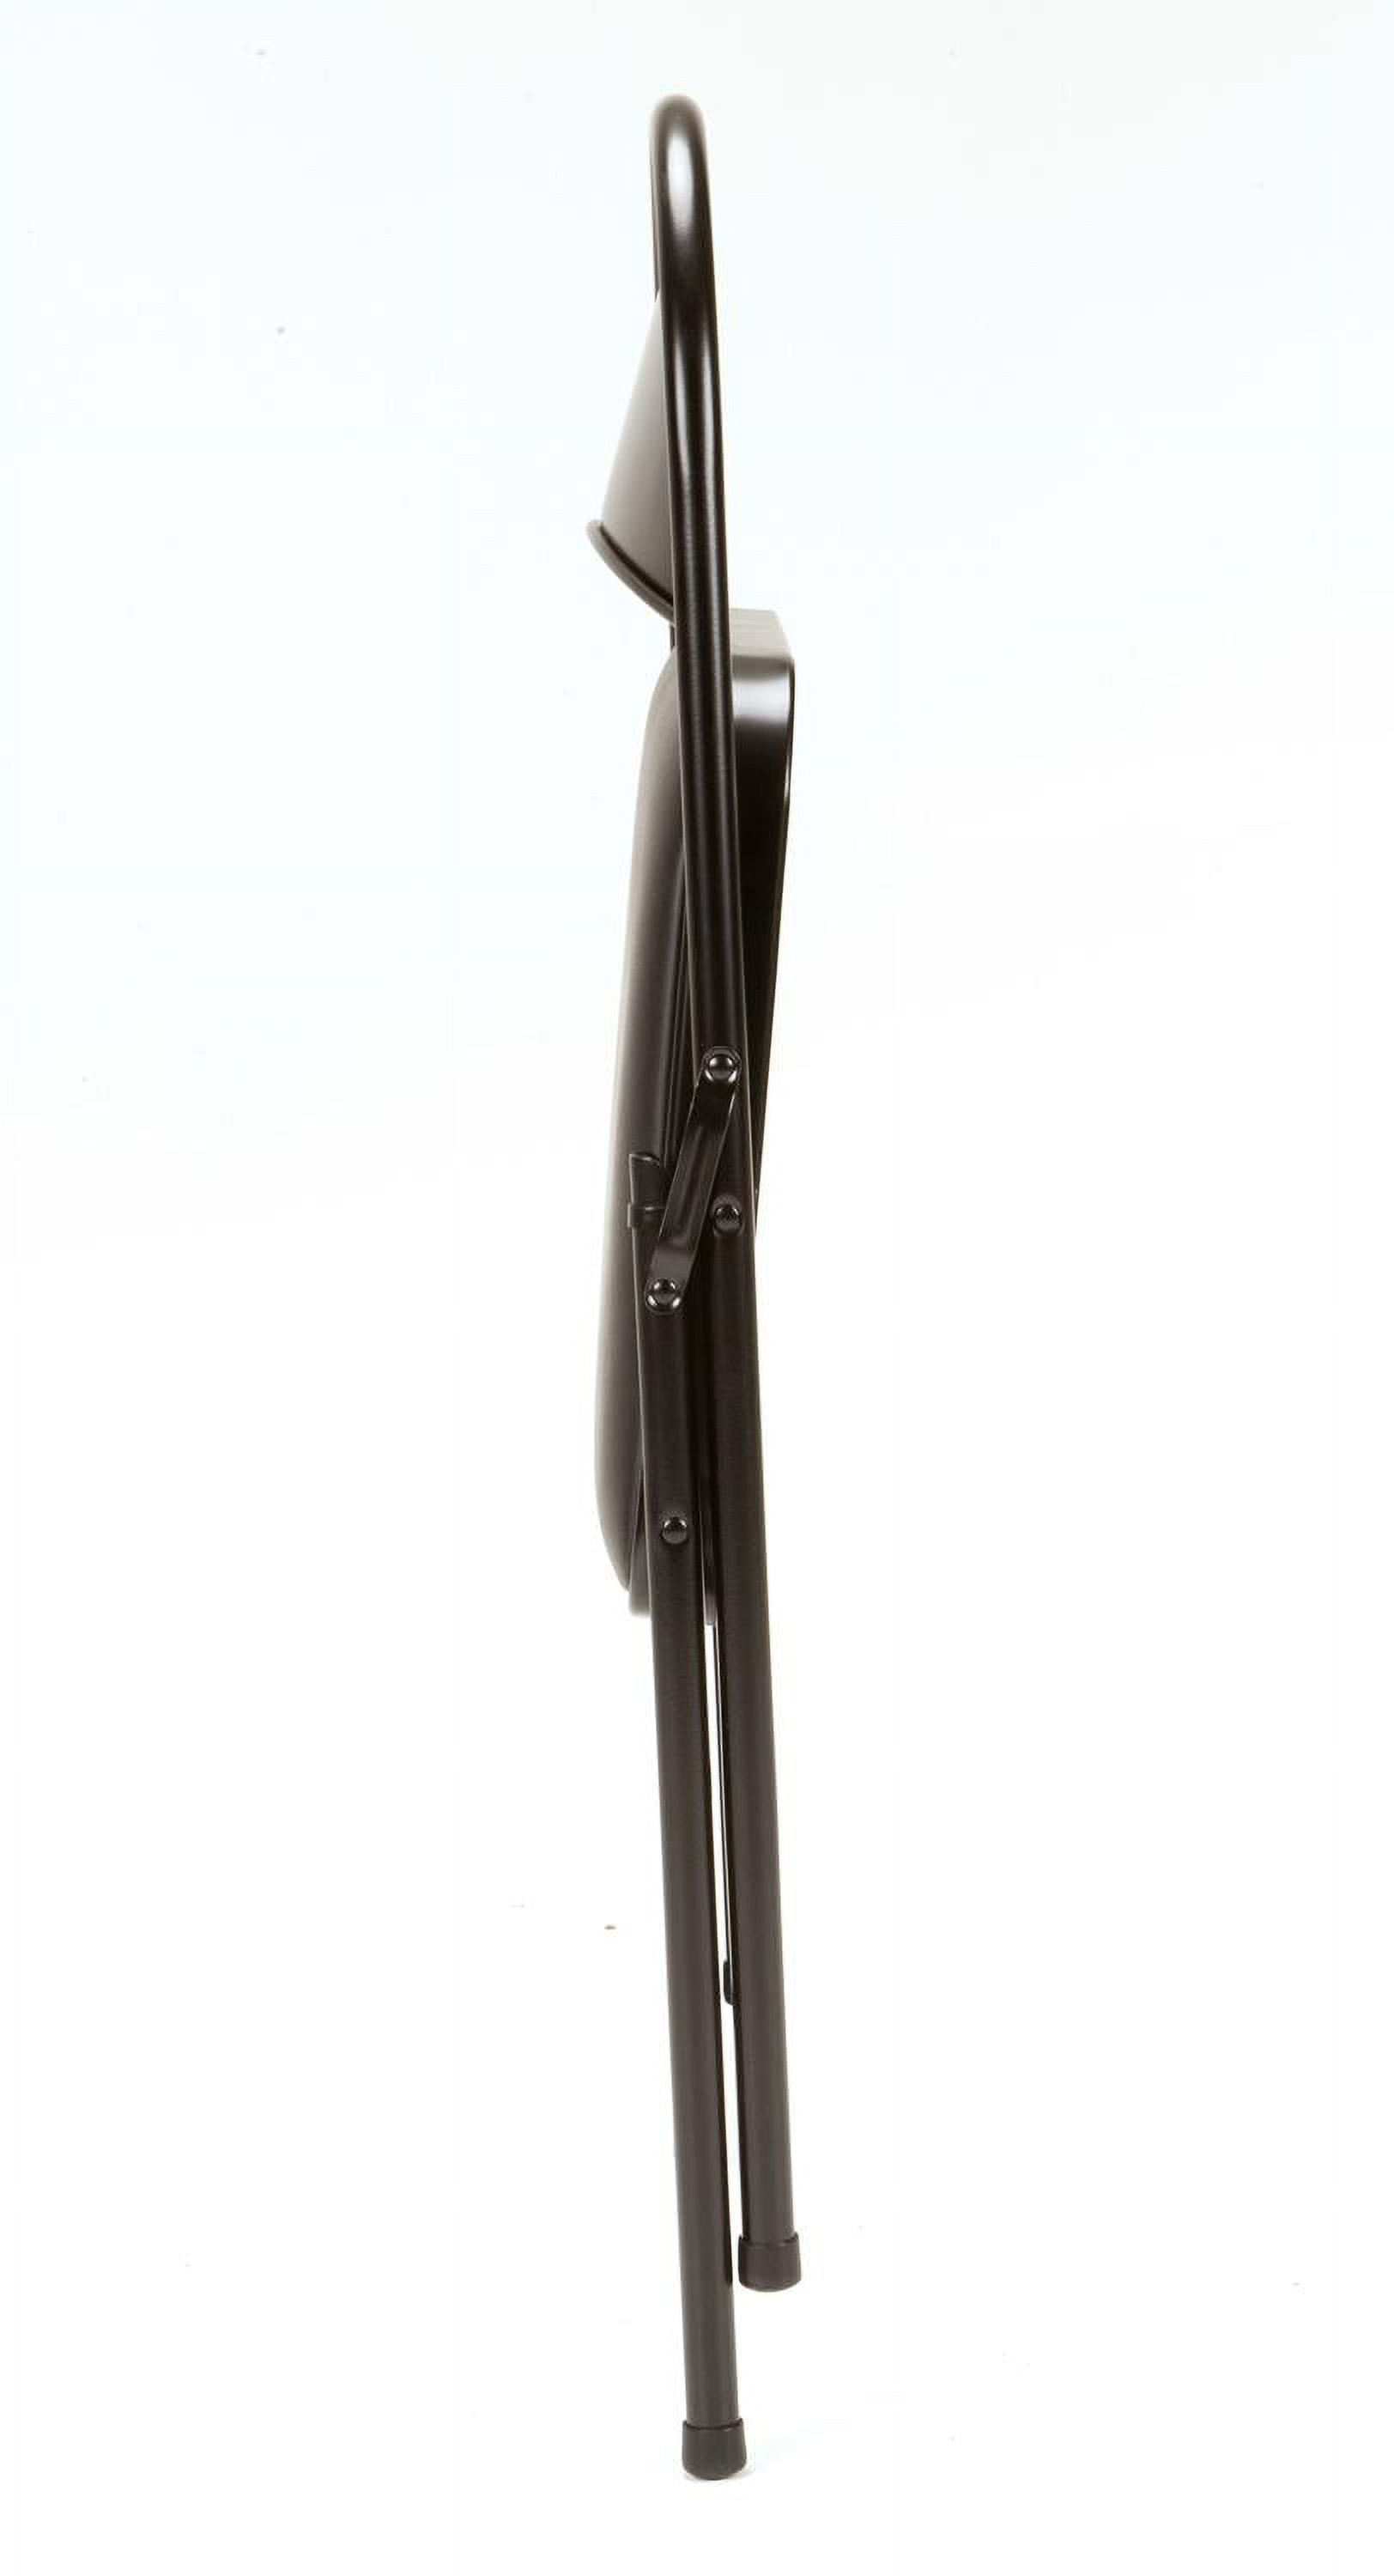 Mainstays Vinyl Folding Chair (4 Pack), Black - image 4 of 12